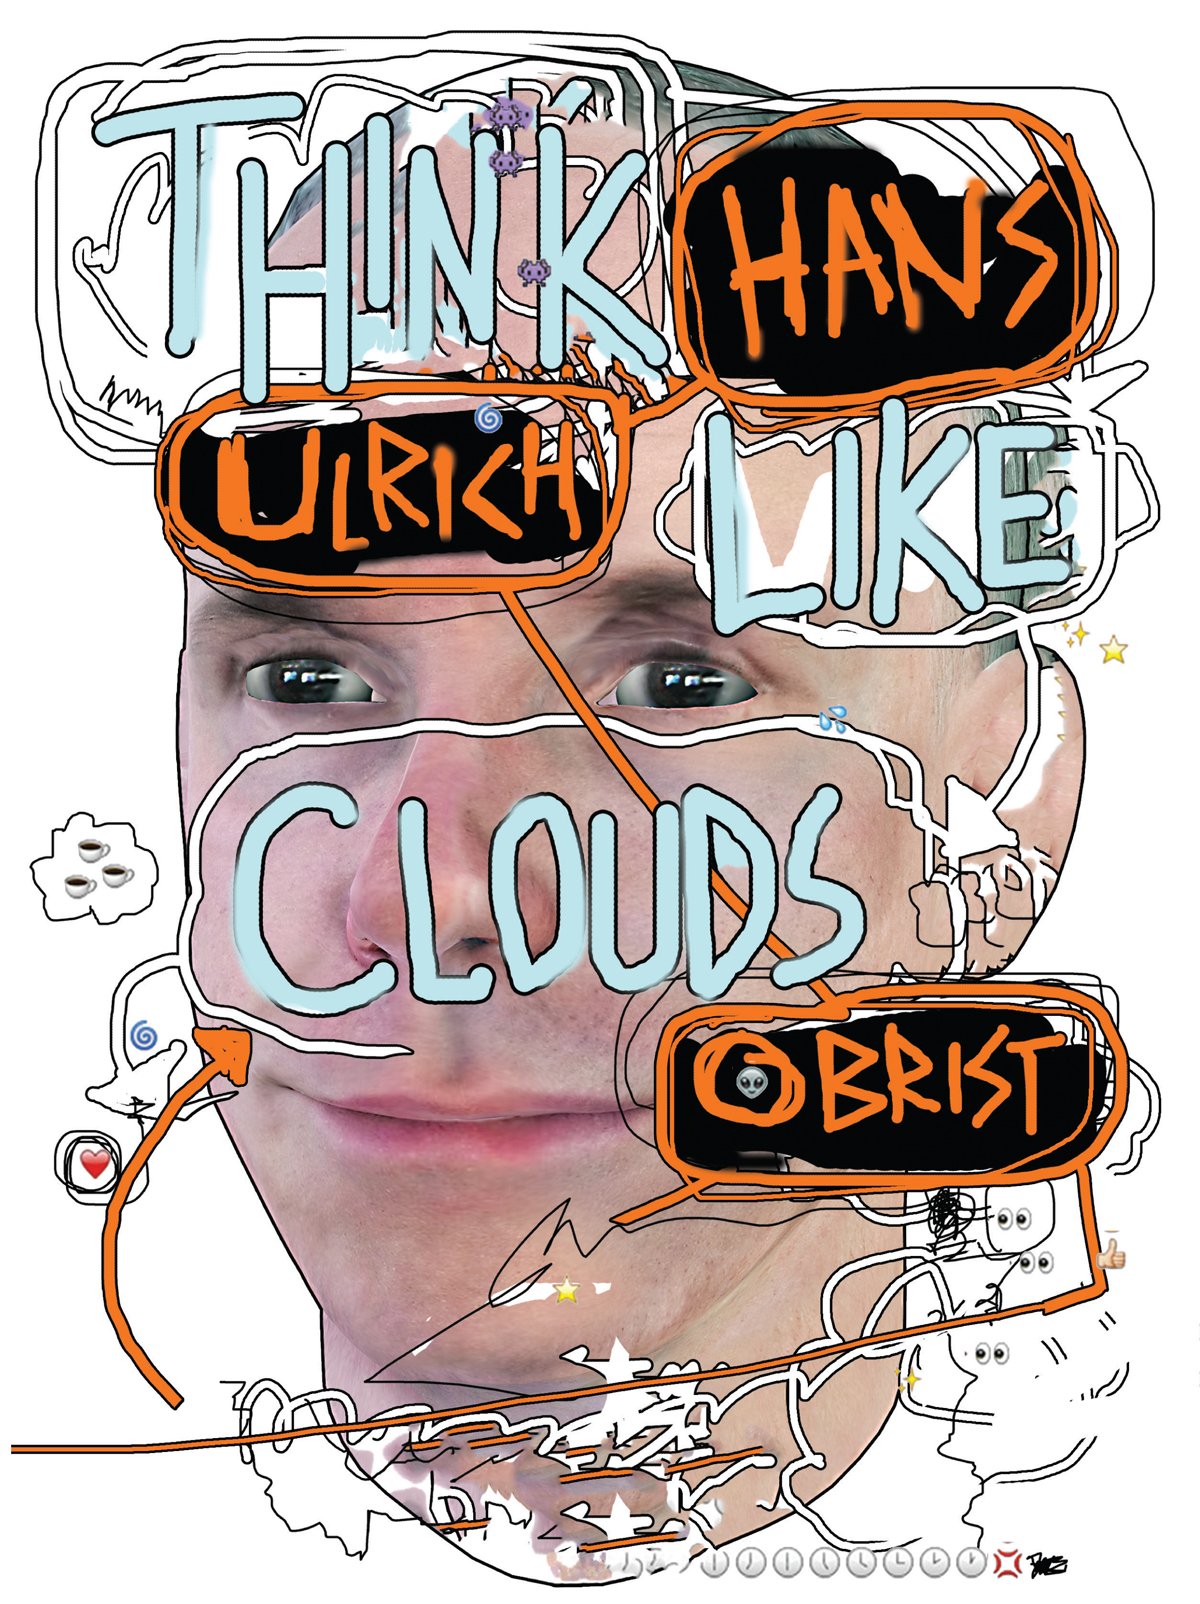 Hans Ulrich Obrist: Think Like Clouds s m l xl rem koolhaas and bruce mau